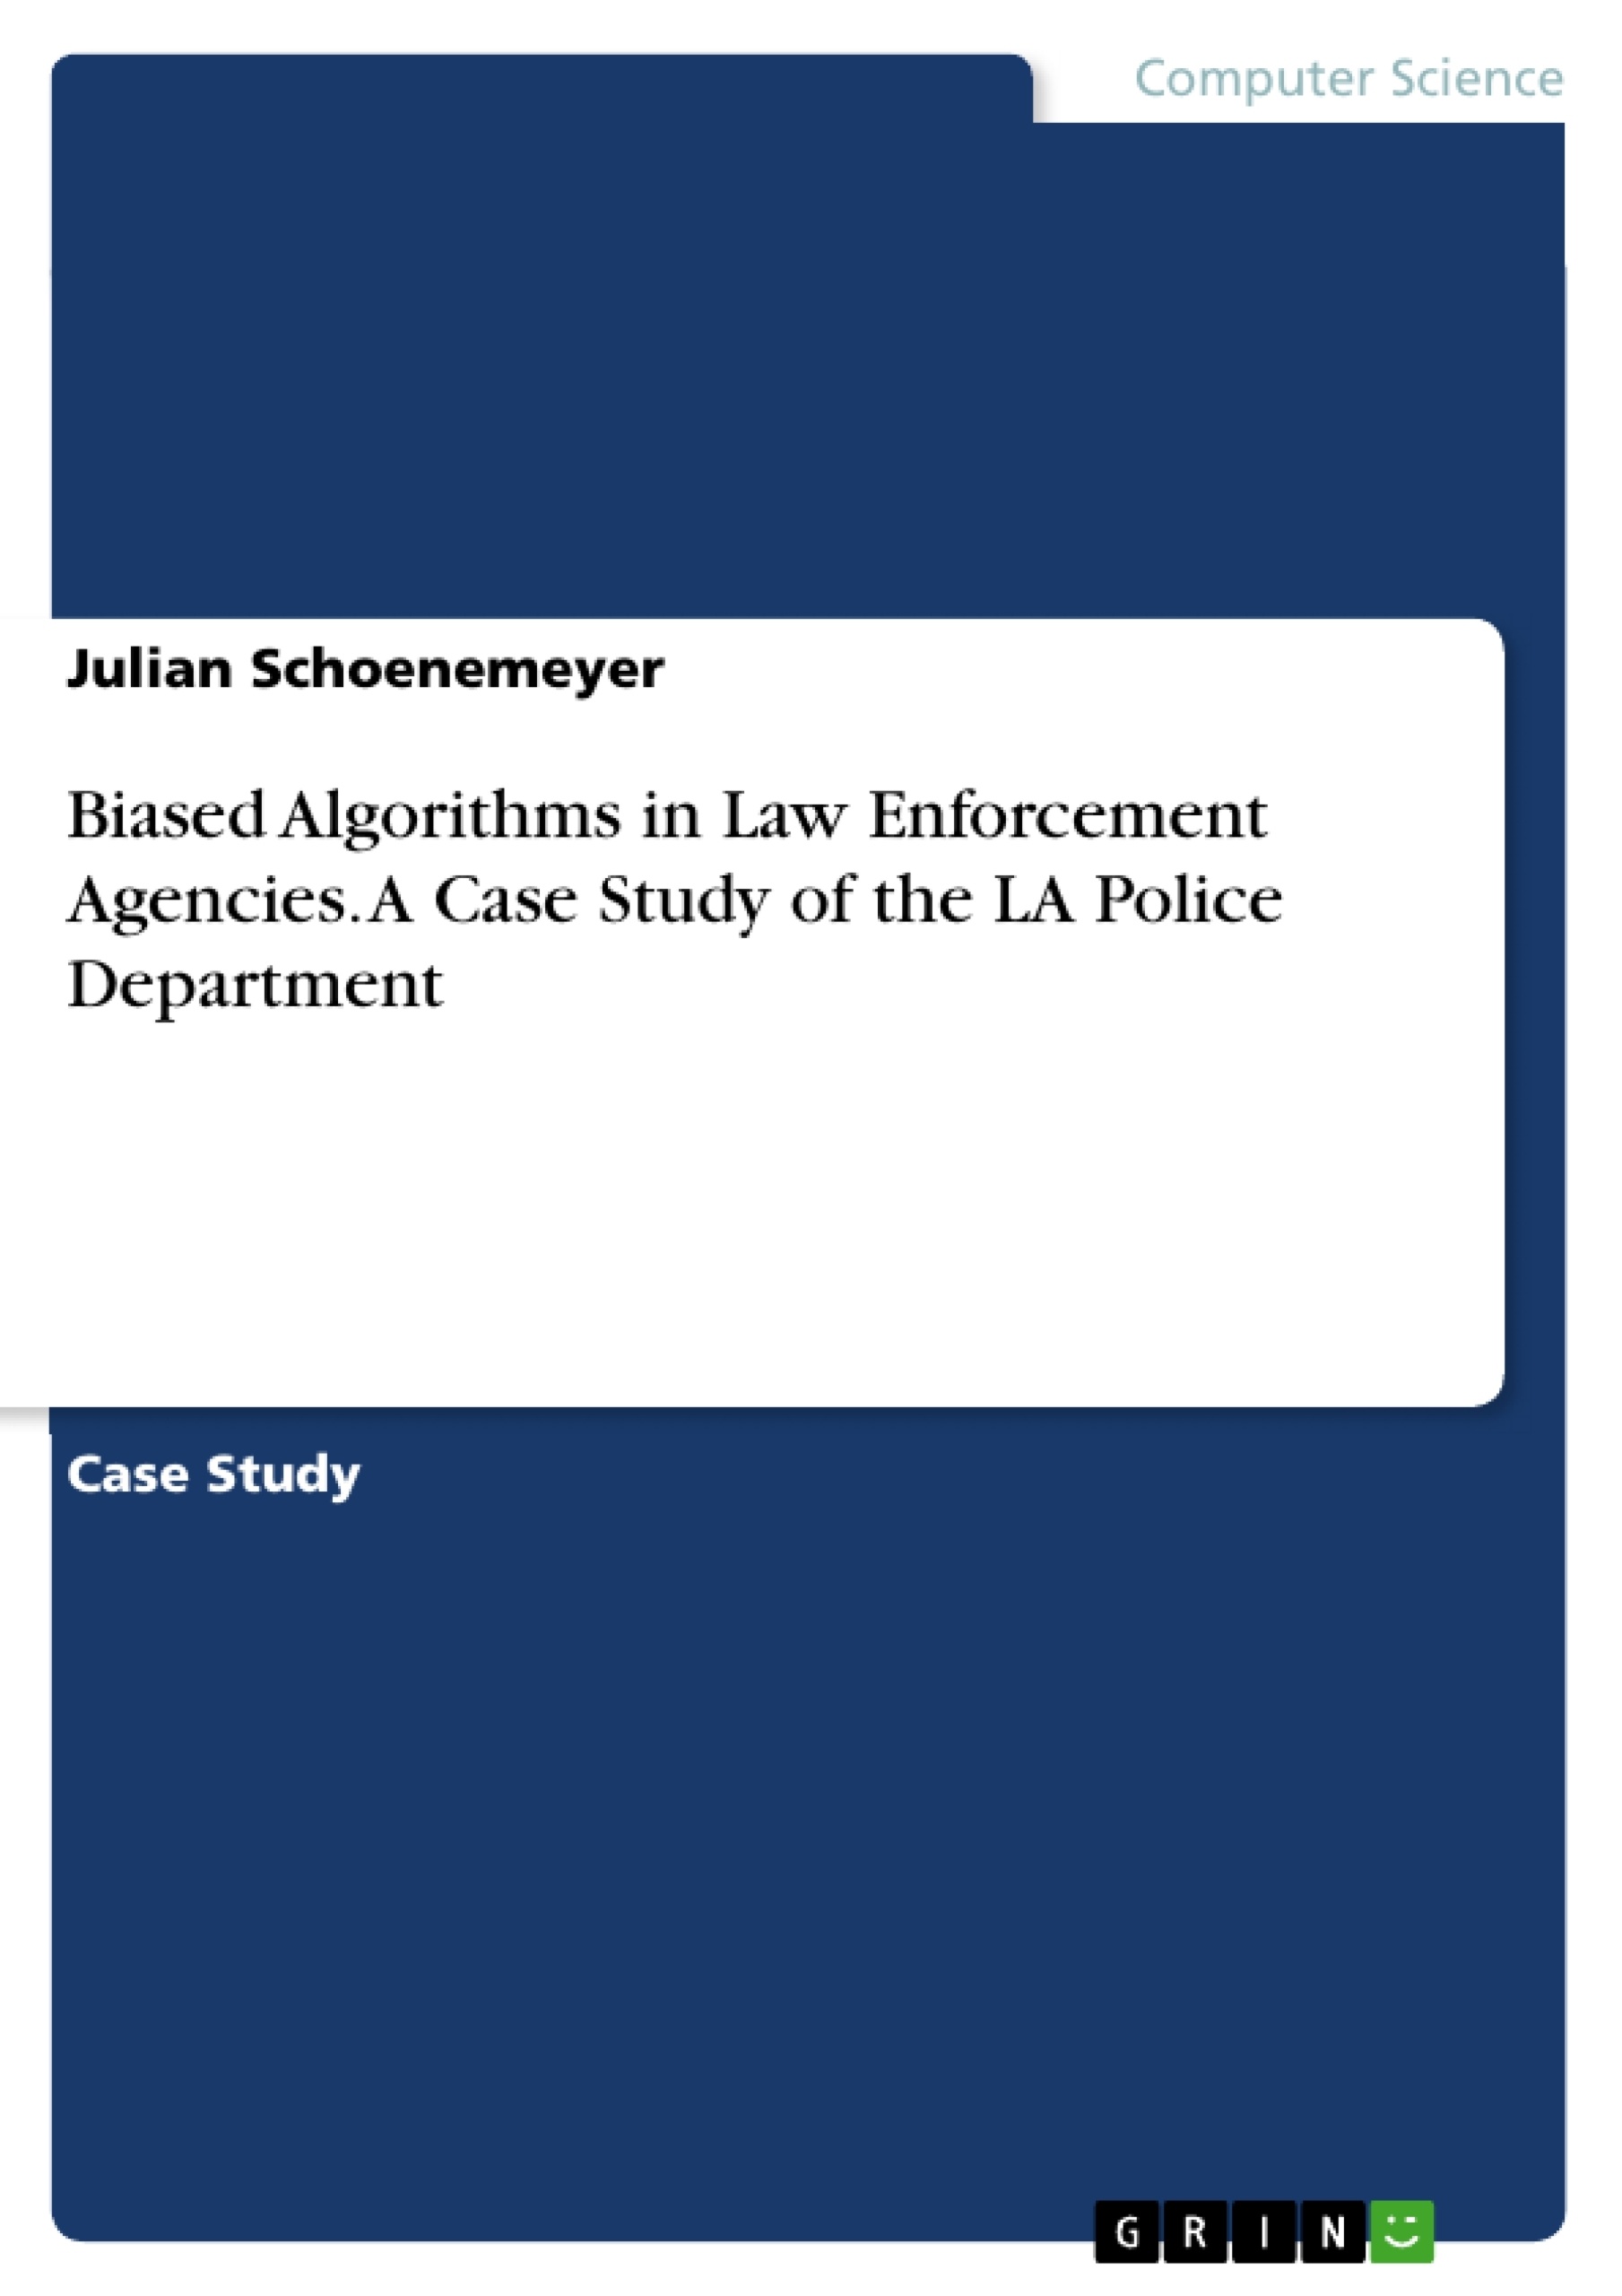 Title: Biased Algorithms in Law Enforcement Agencies. A Case Study of the LA Police Department